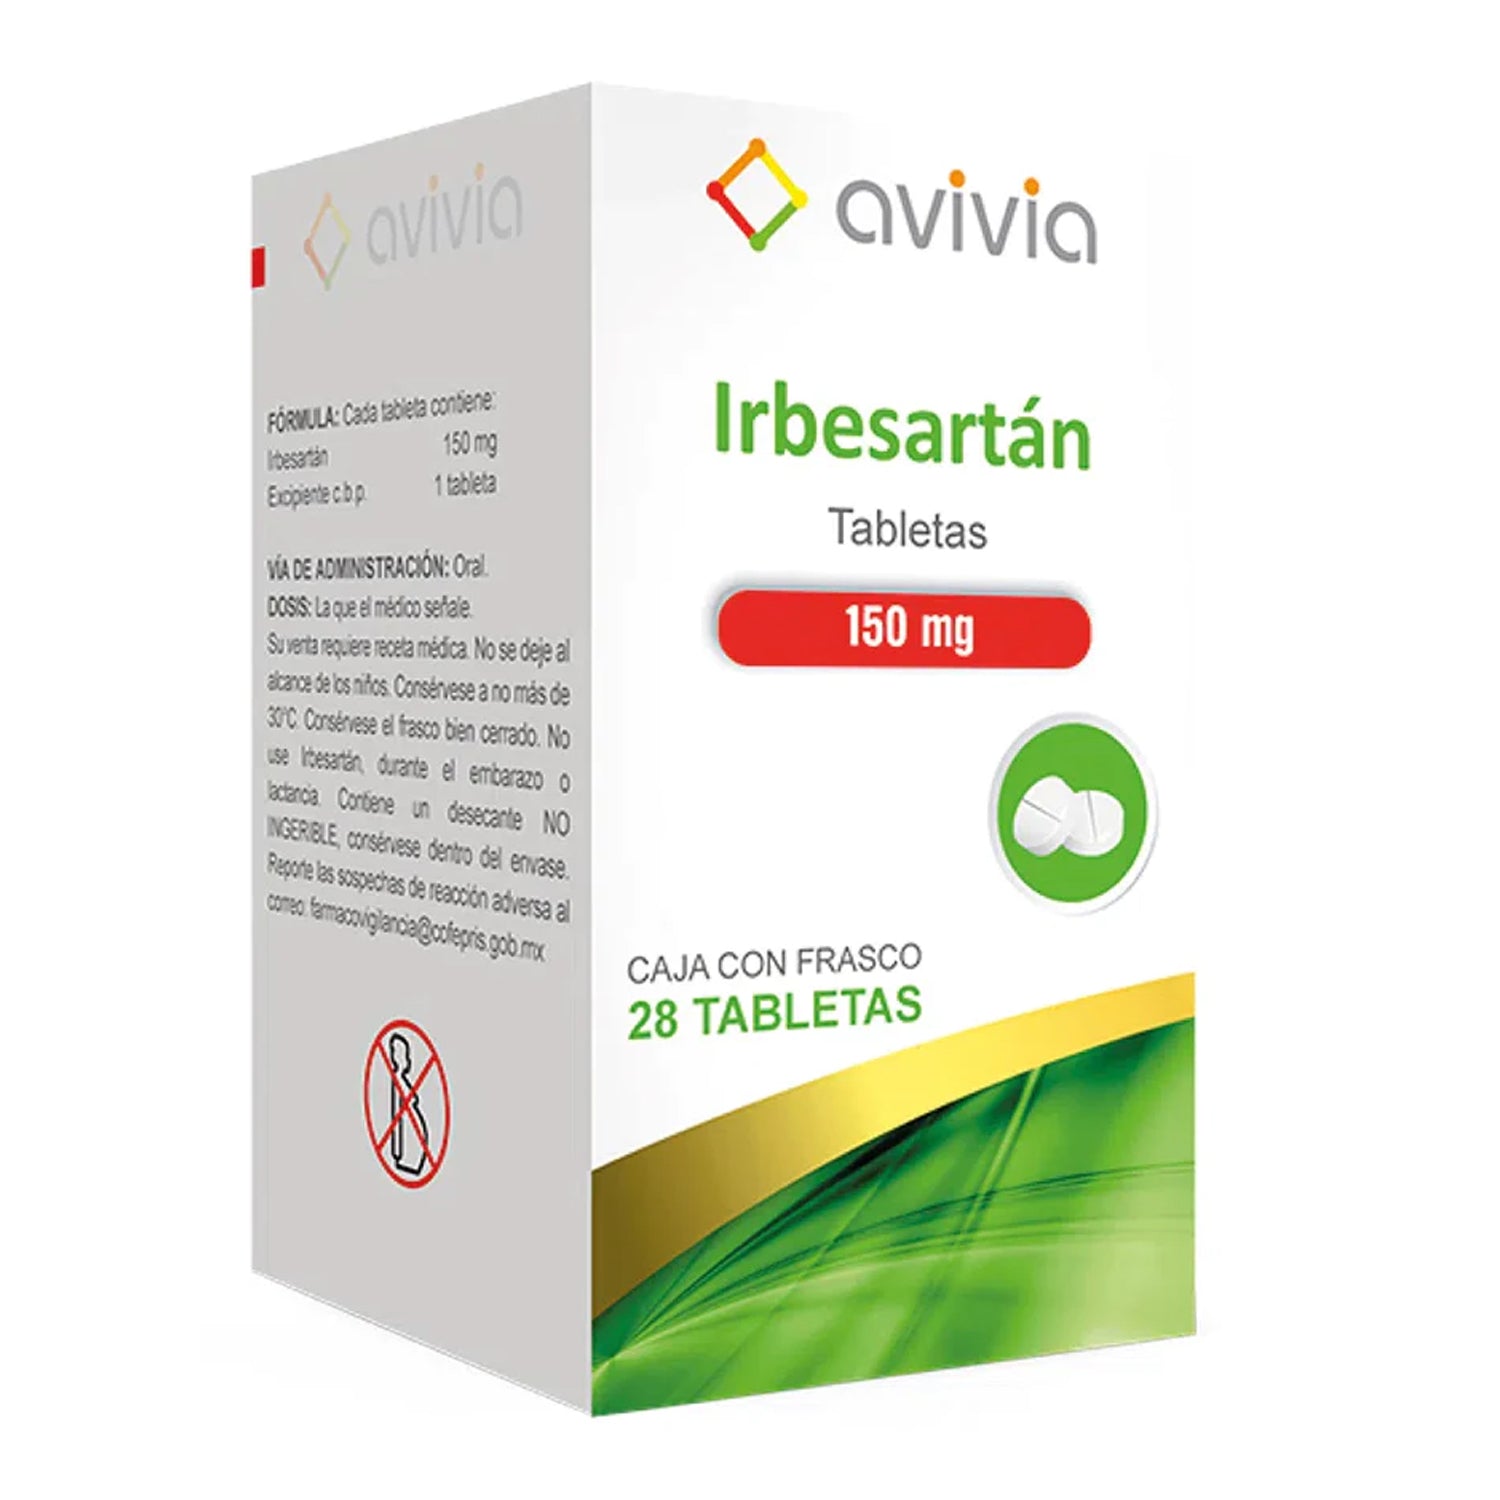 Irbersartan 150 mg, Frasco con 28 tabletas. Avivia. – Vitialife